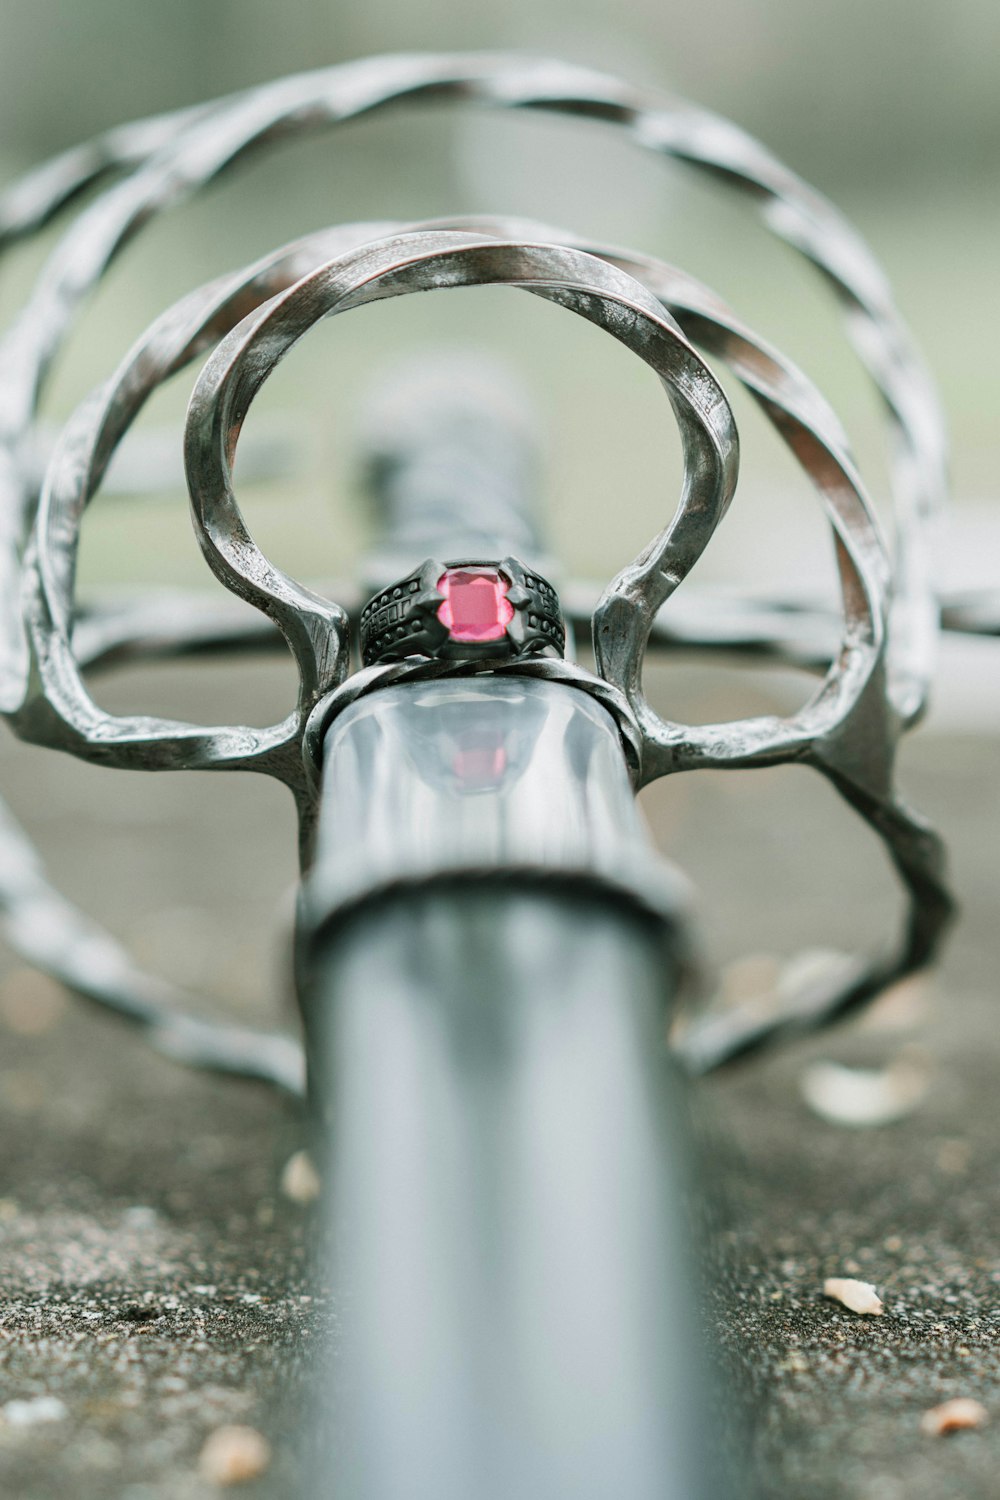 a close up of a bike's spokes and handlebars